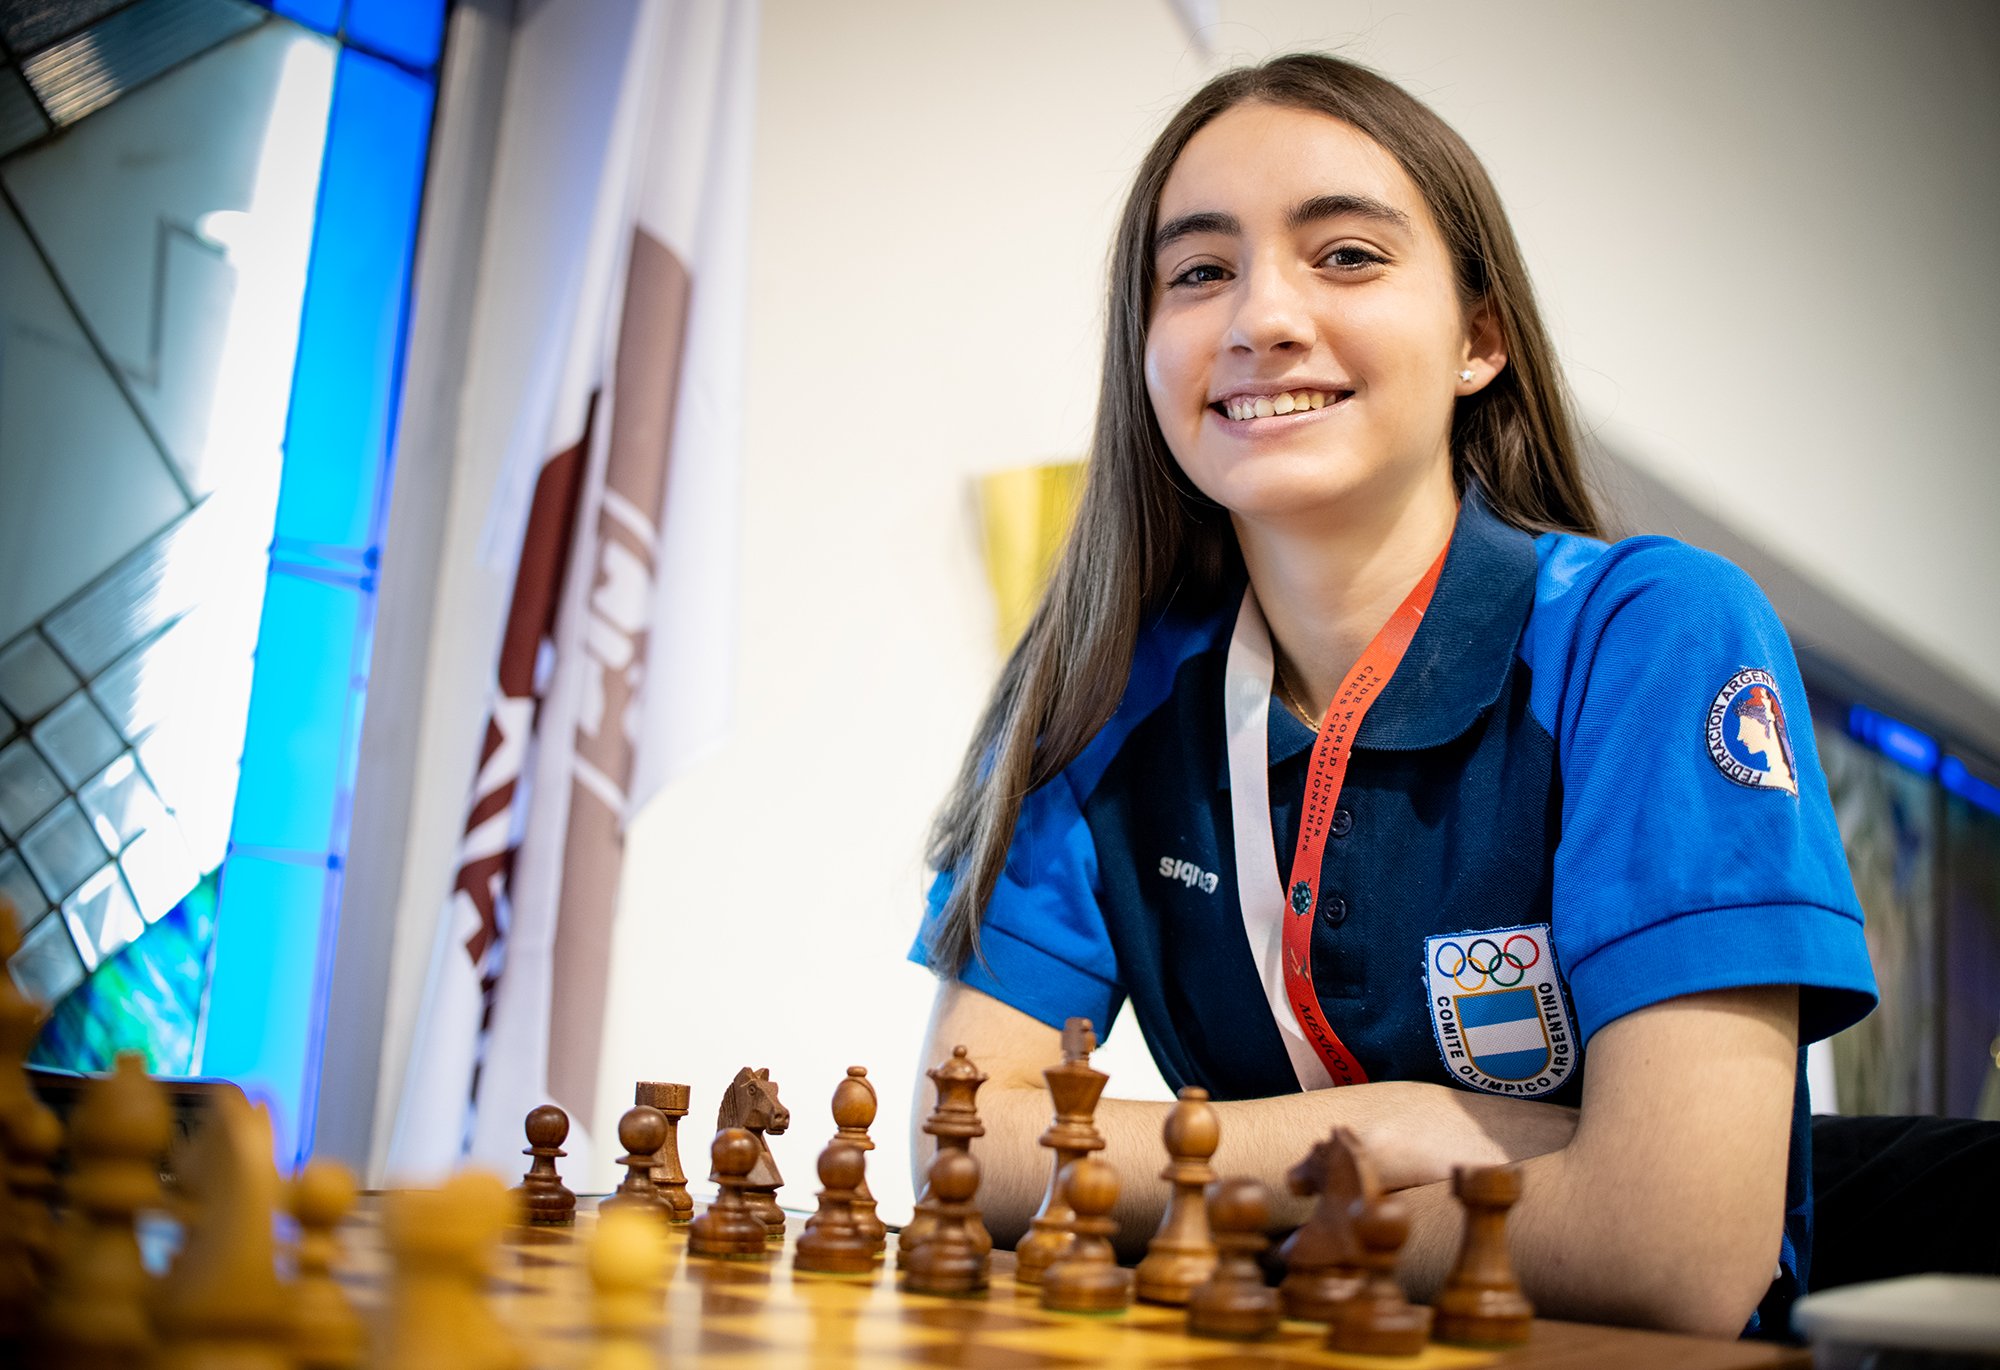 FIDE World Junior Chess Championships 2022 